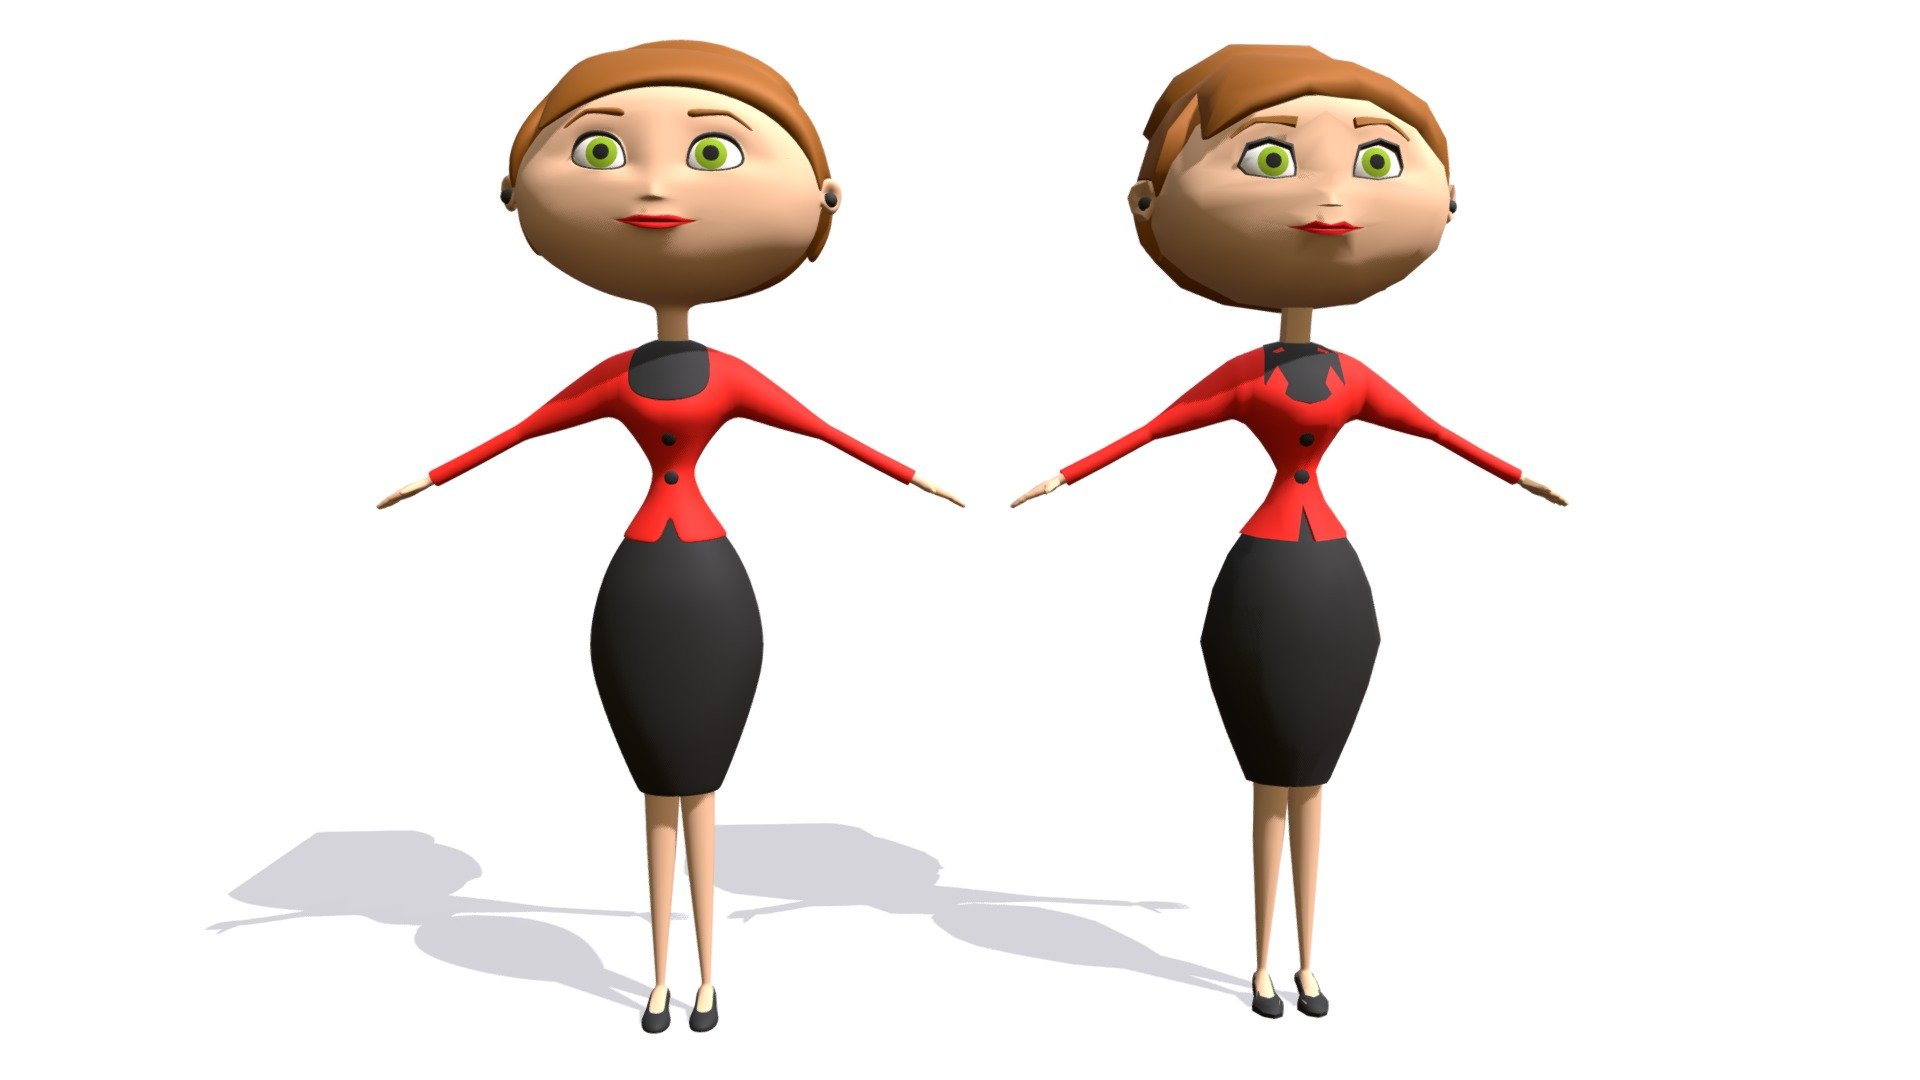 Quality 3d model of cartoon woman character 3d model